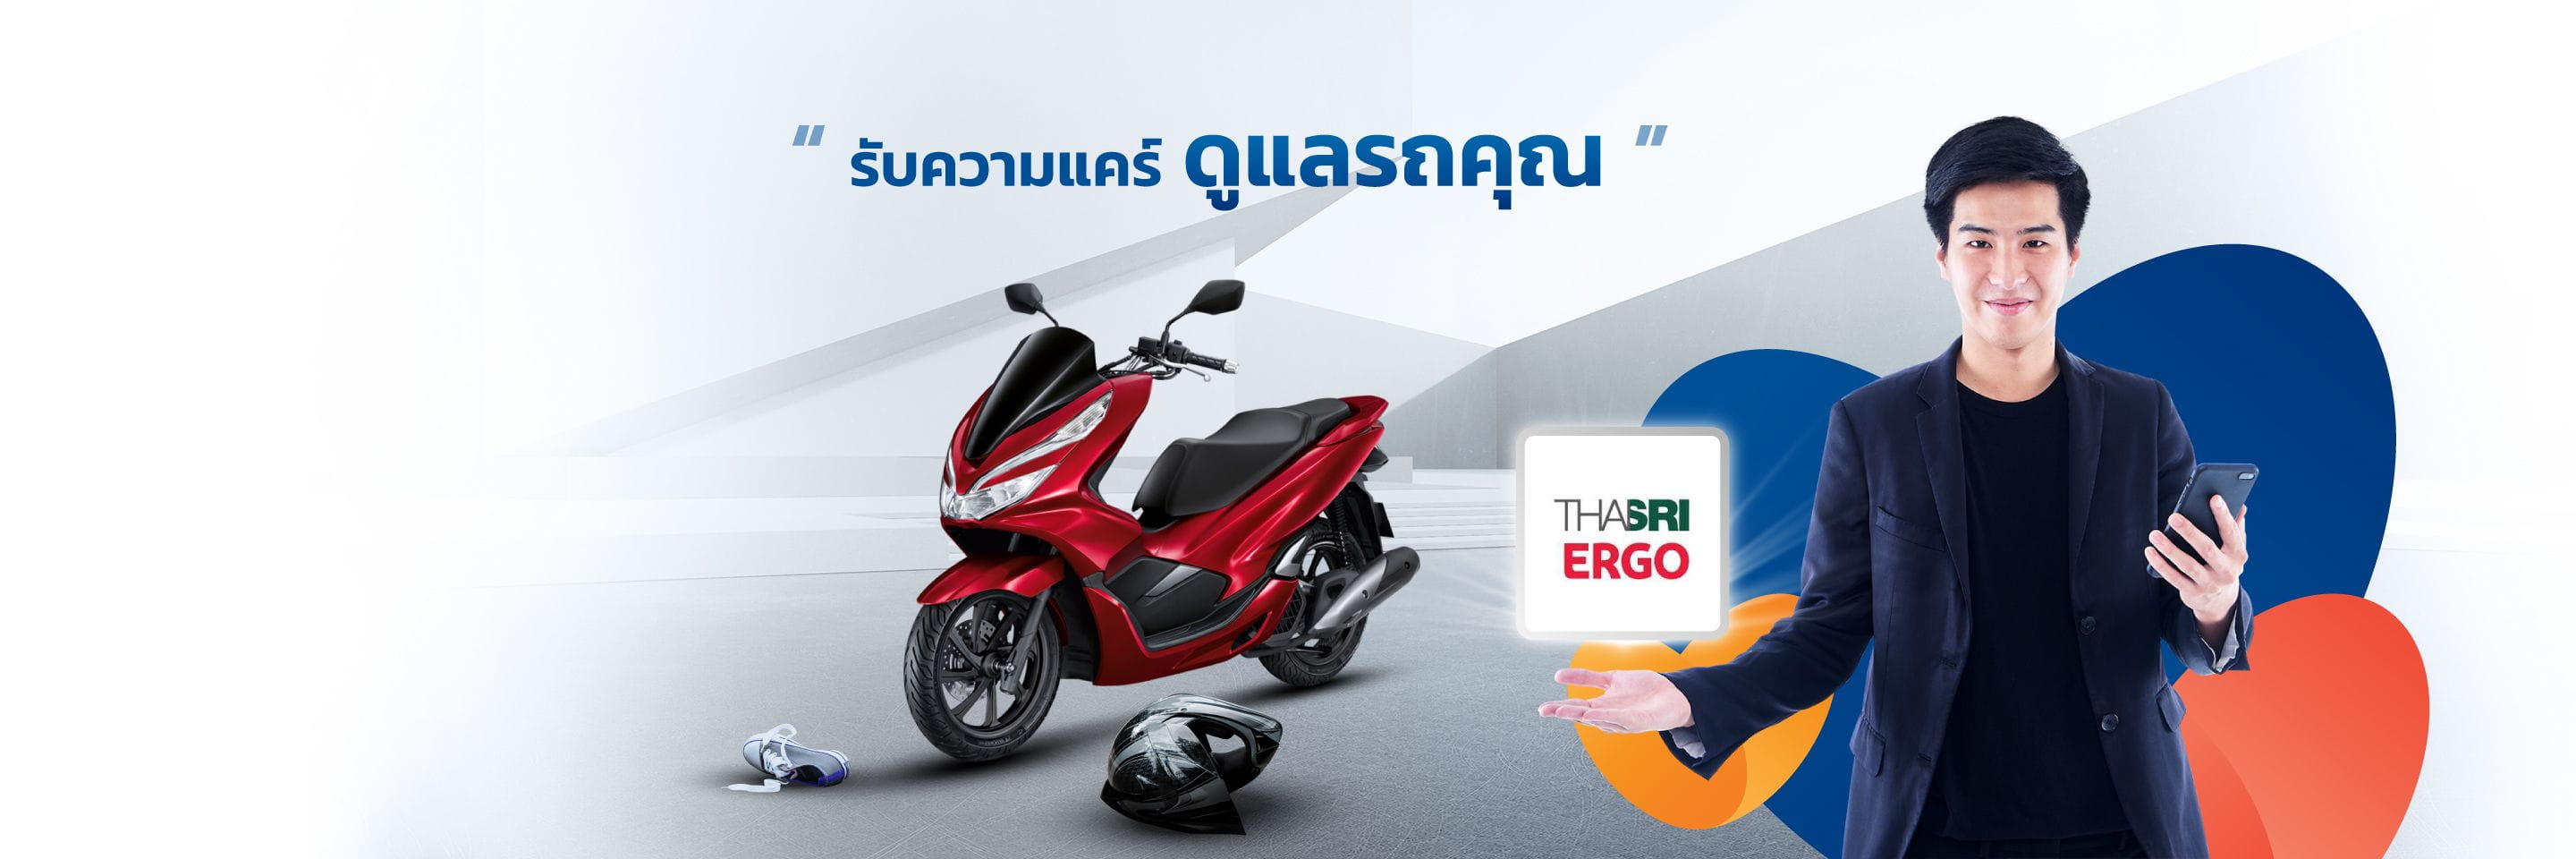 Motorbike Suppliers_Slider_Top banner Thaisri.jpg